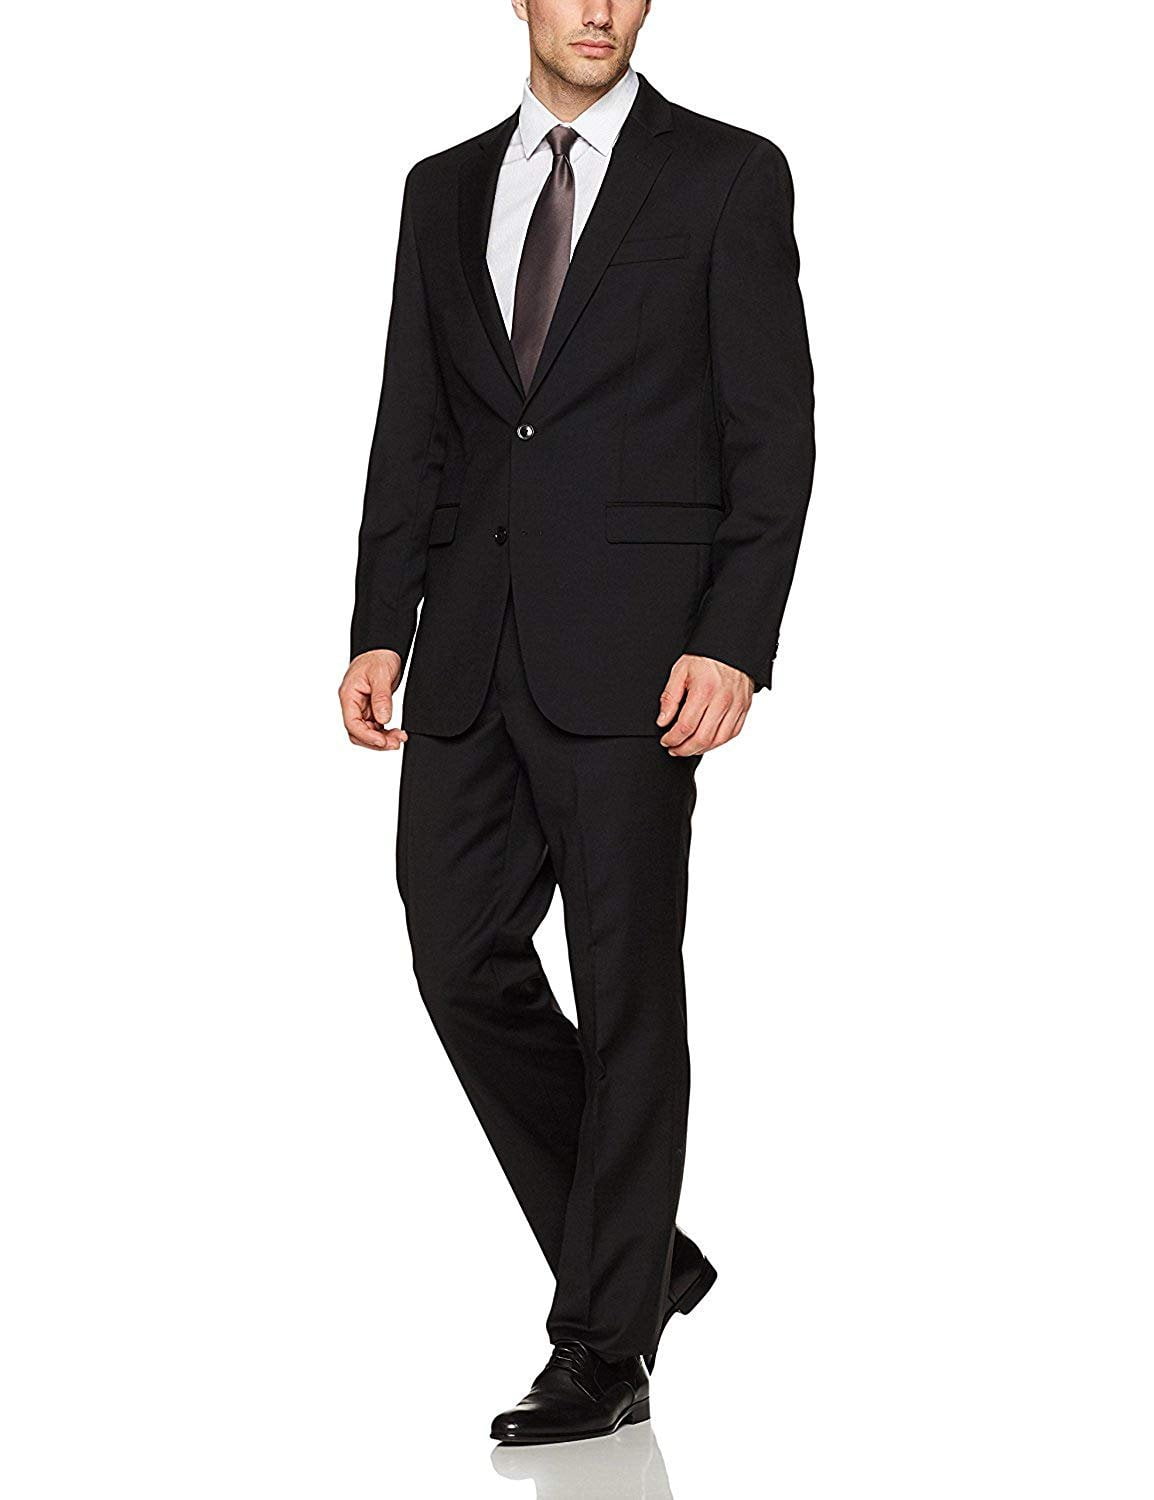 Colors Adam Baker Men's 3-Piece Single Breasted Slim Fit Suit & Tuxedo